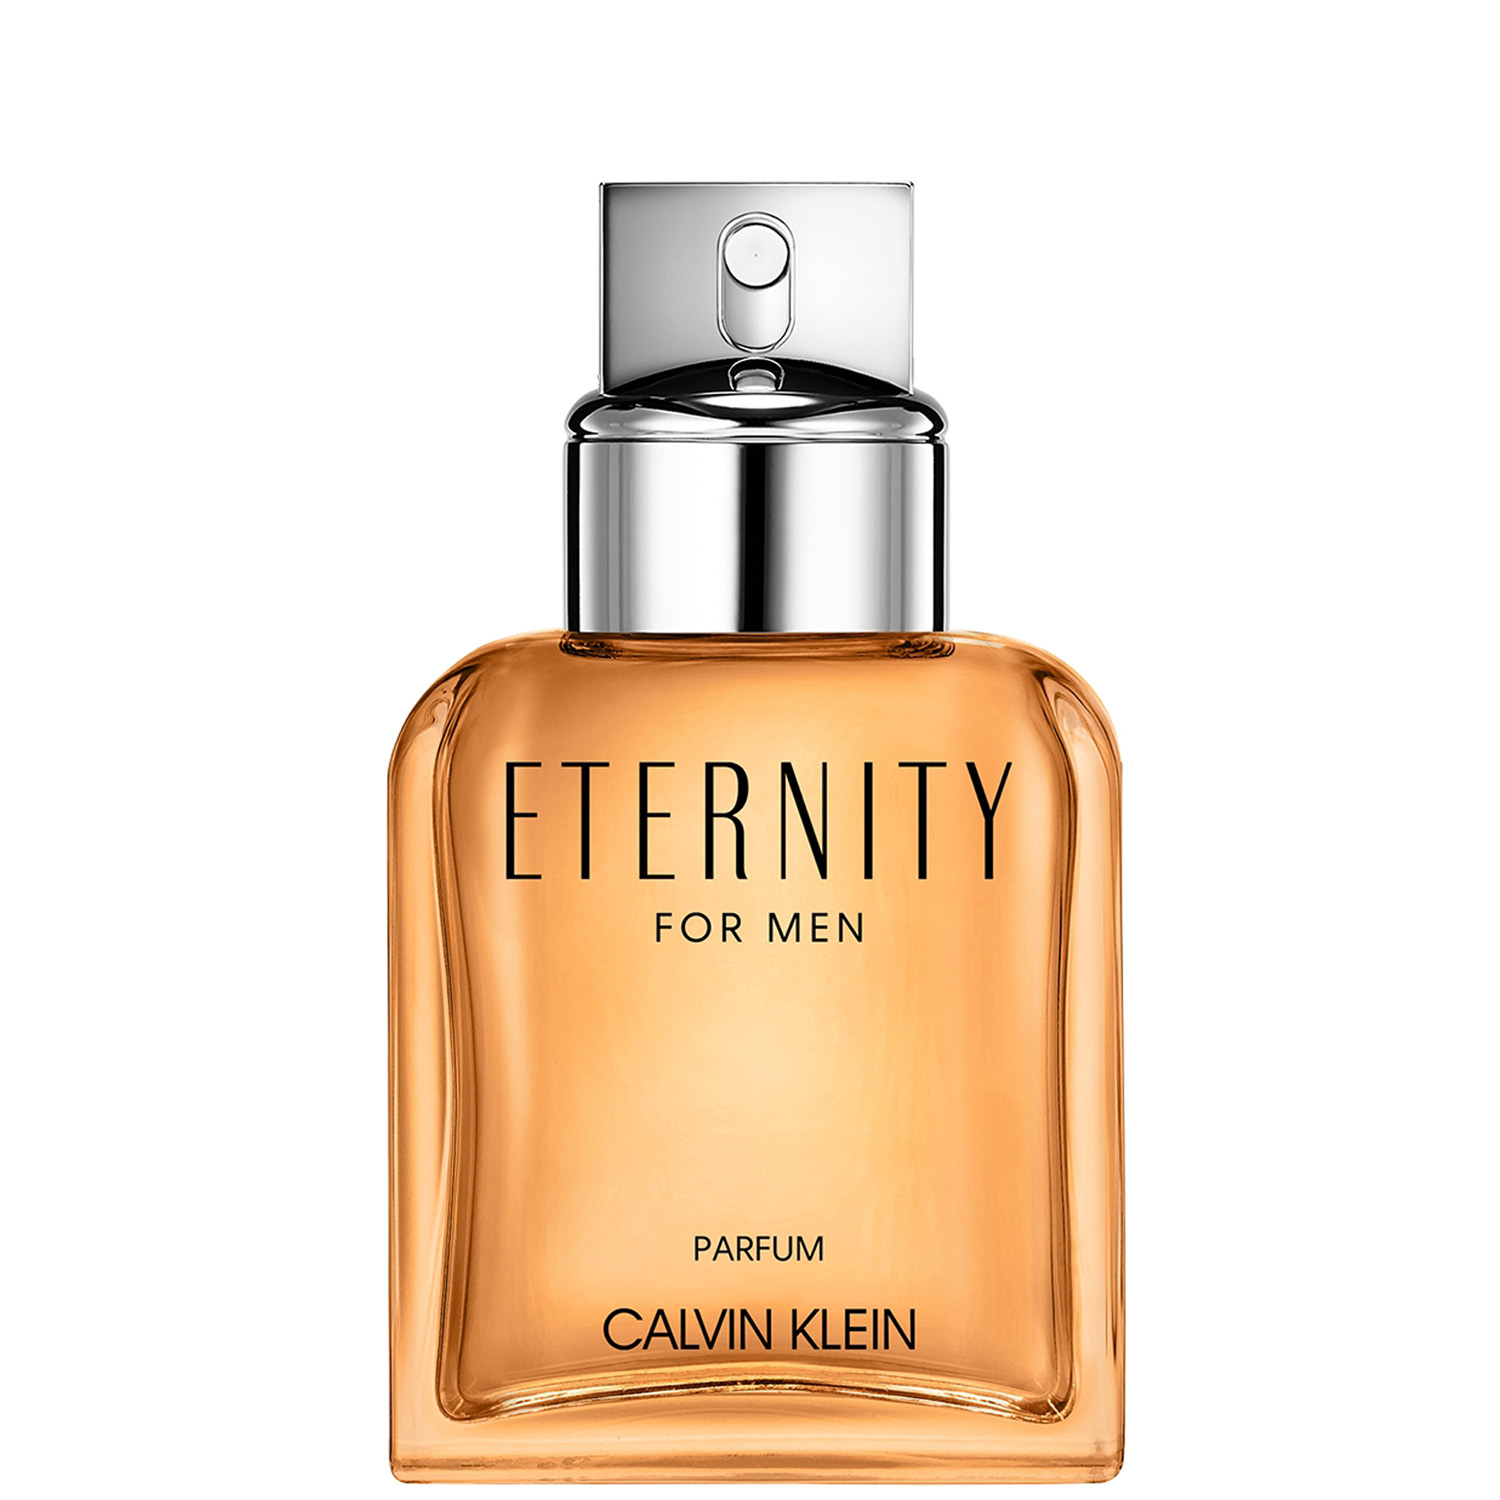 Calvin Klein Eternity for Men Parfum 50ml